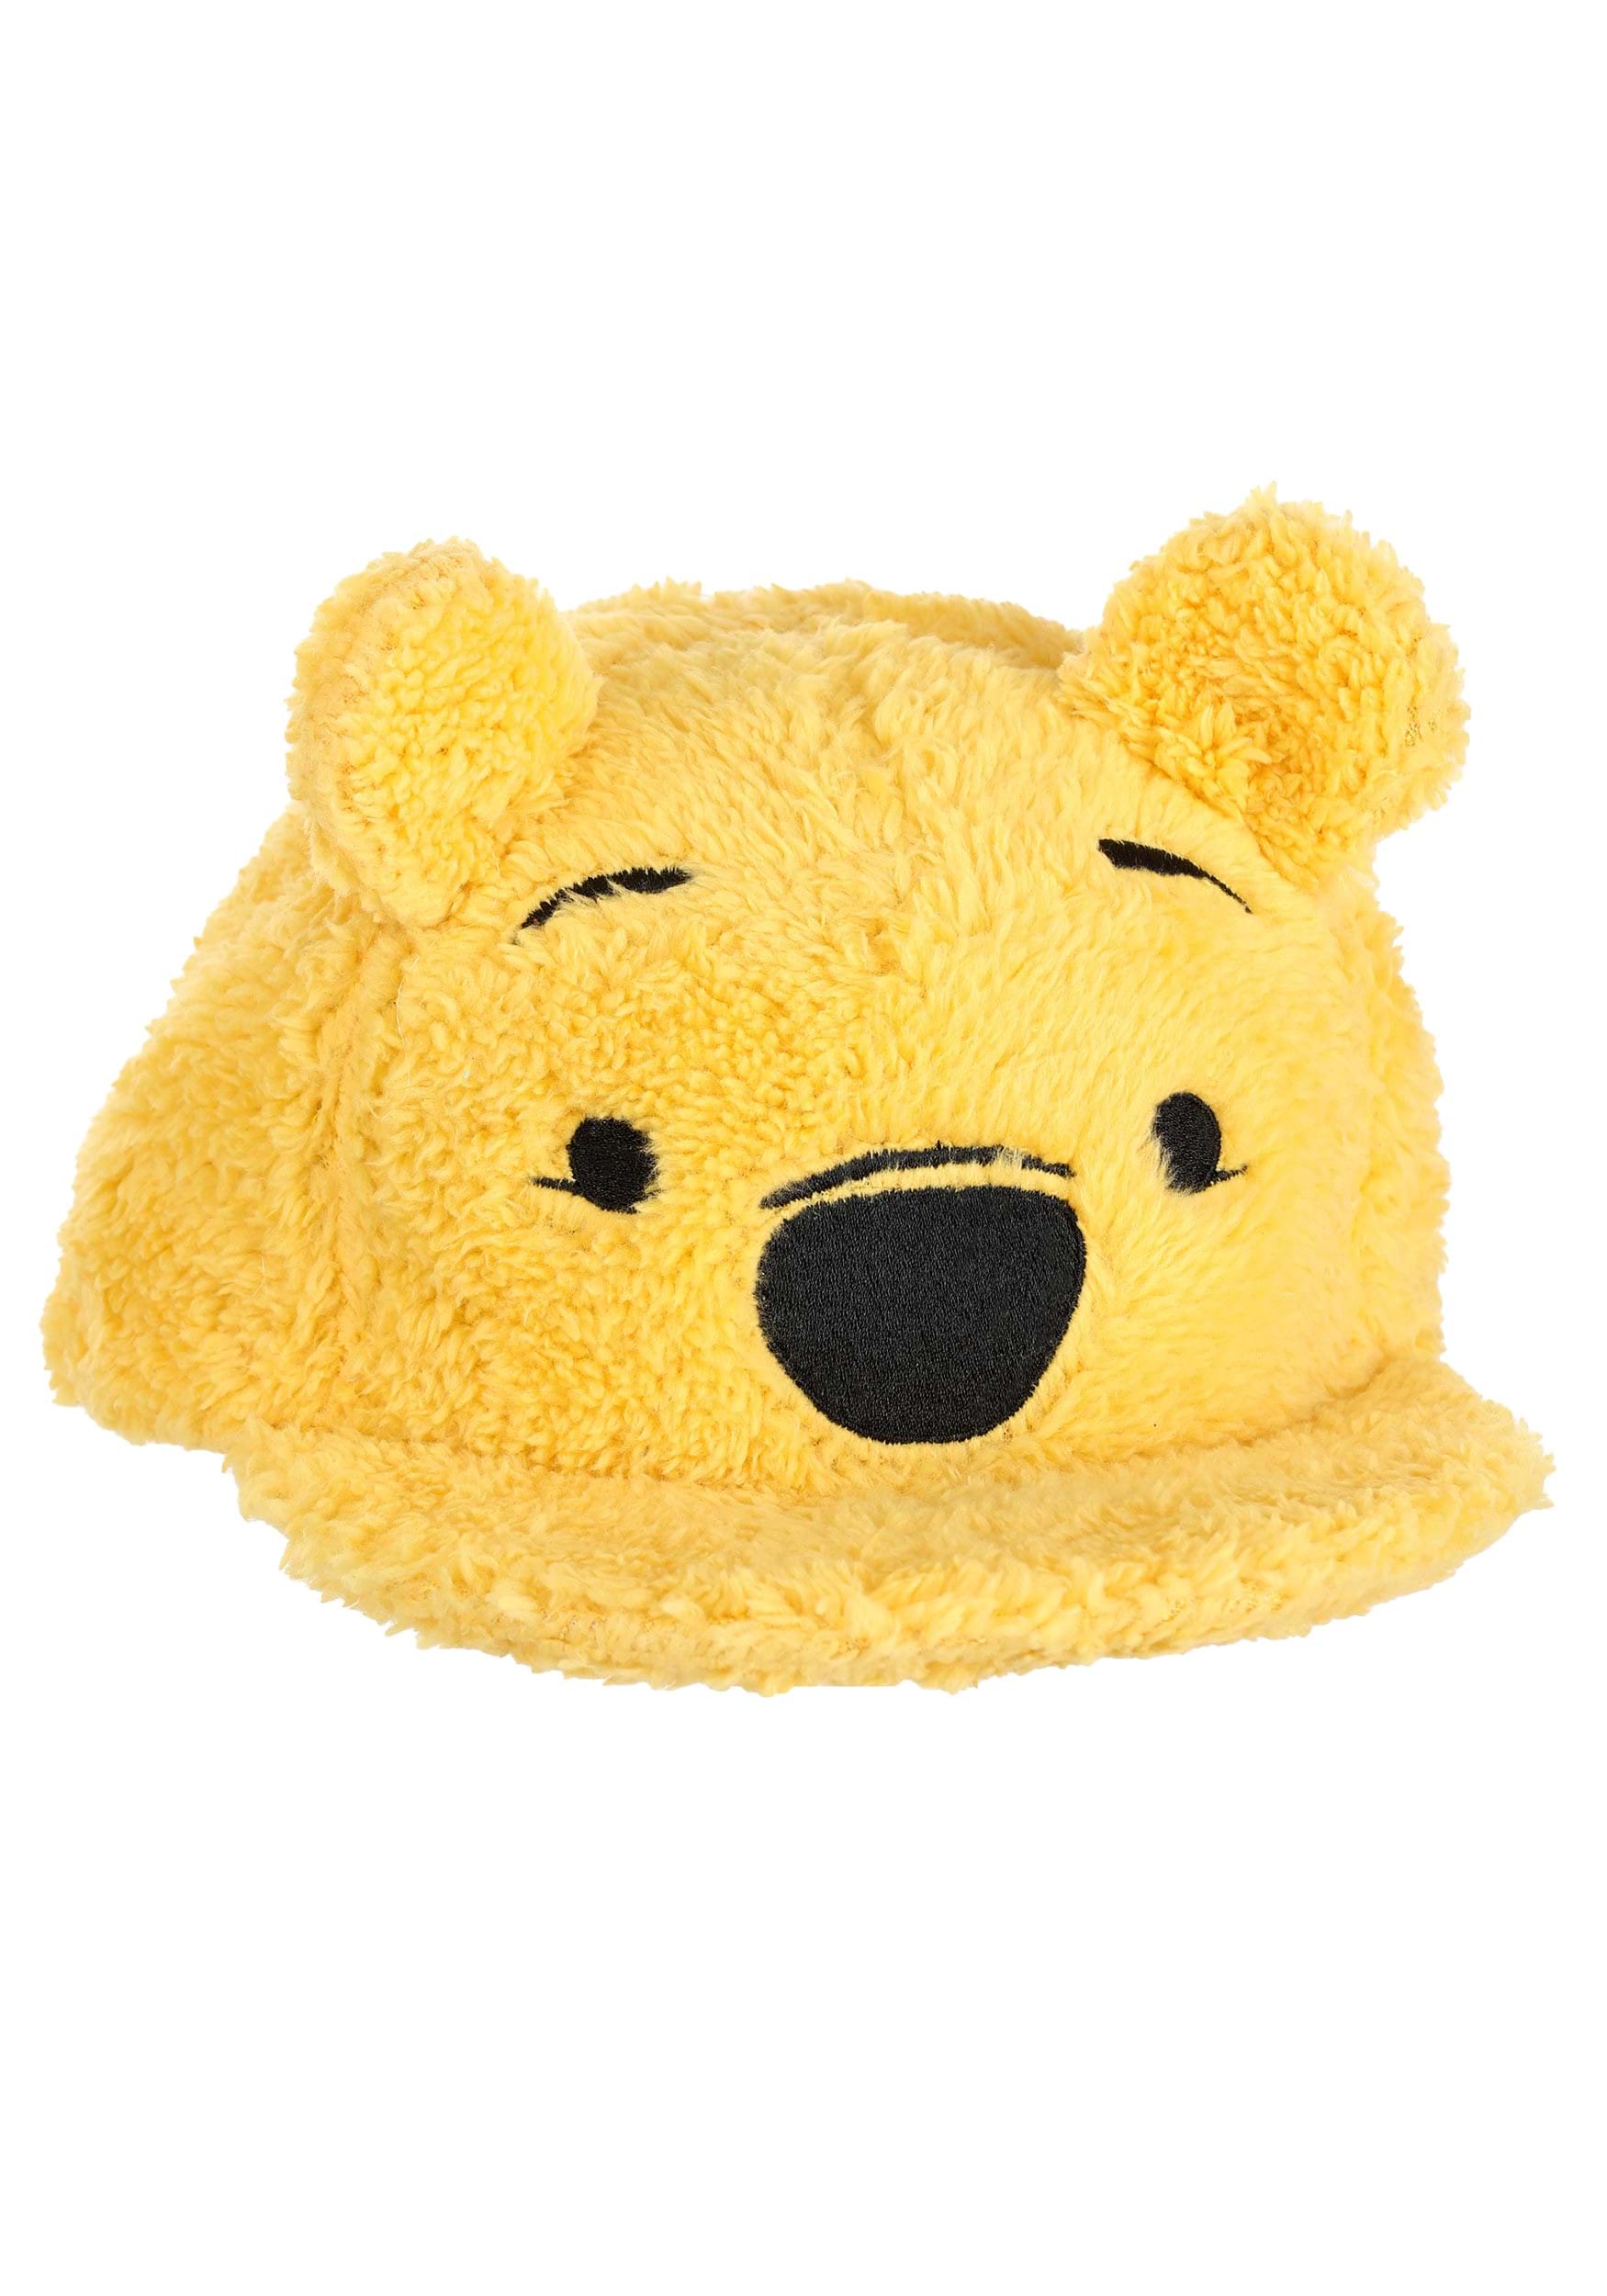 Disney Winnie the Pooh Fuzzy Costume Cap